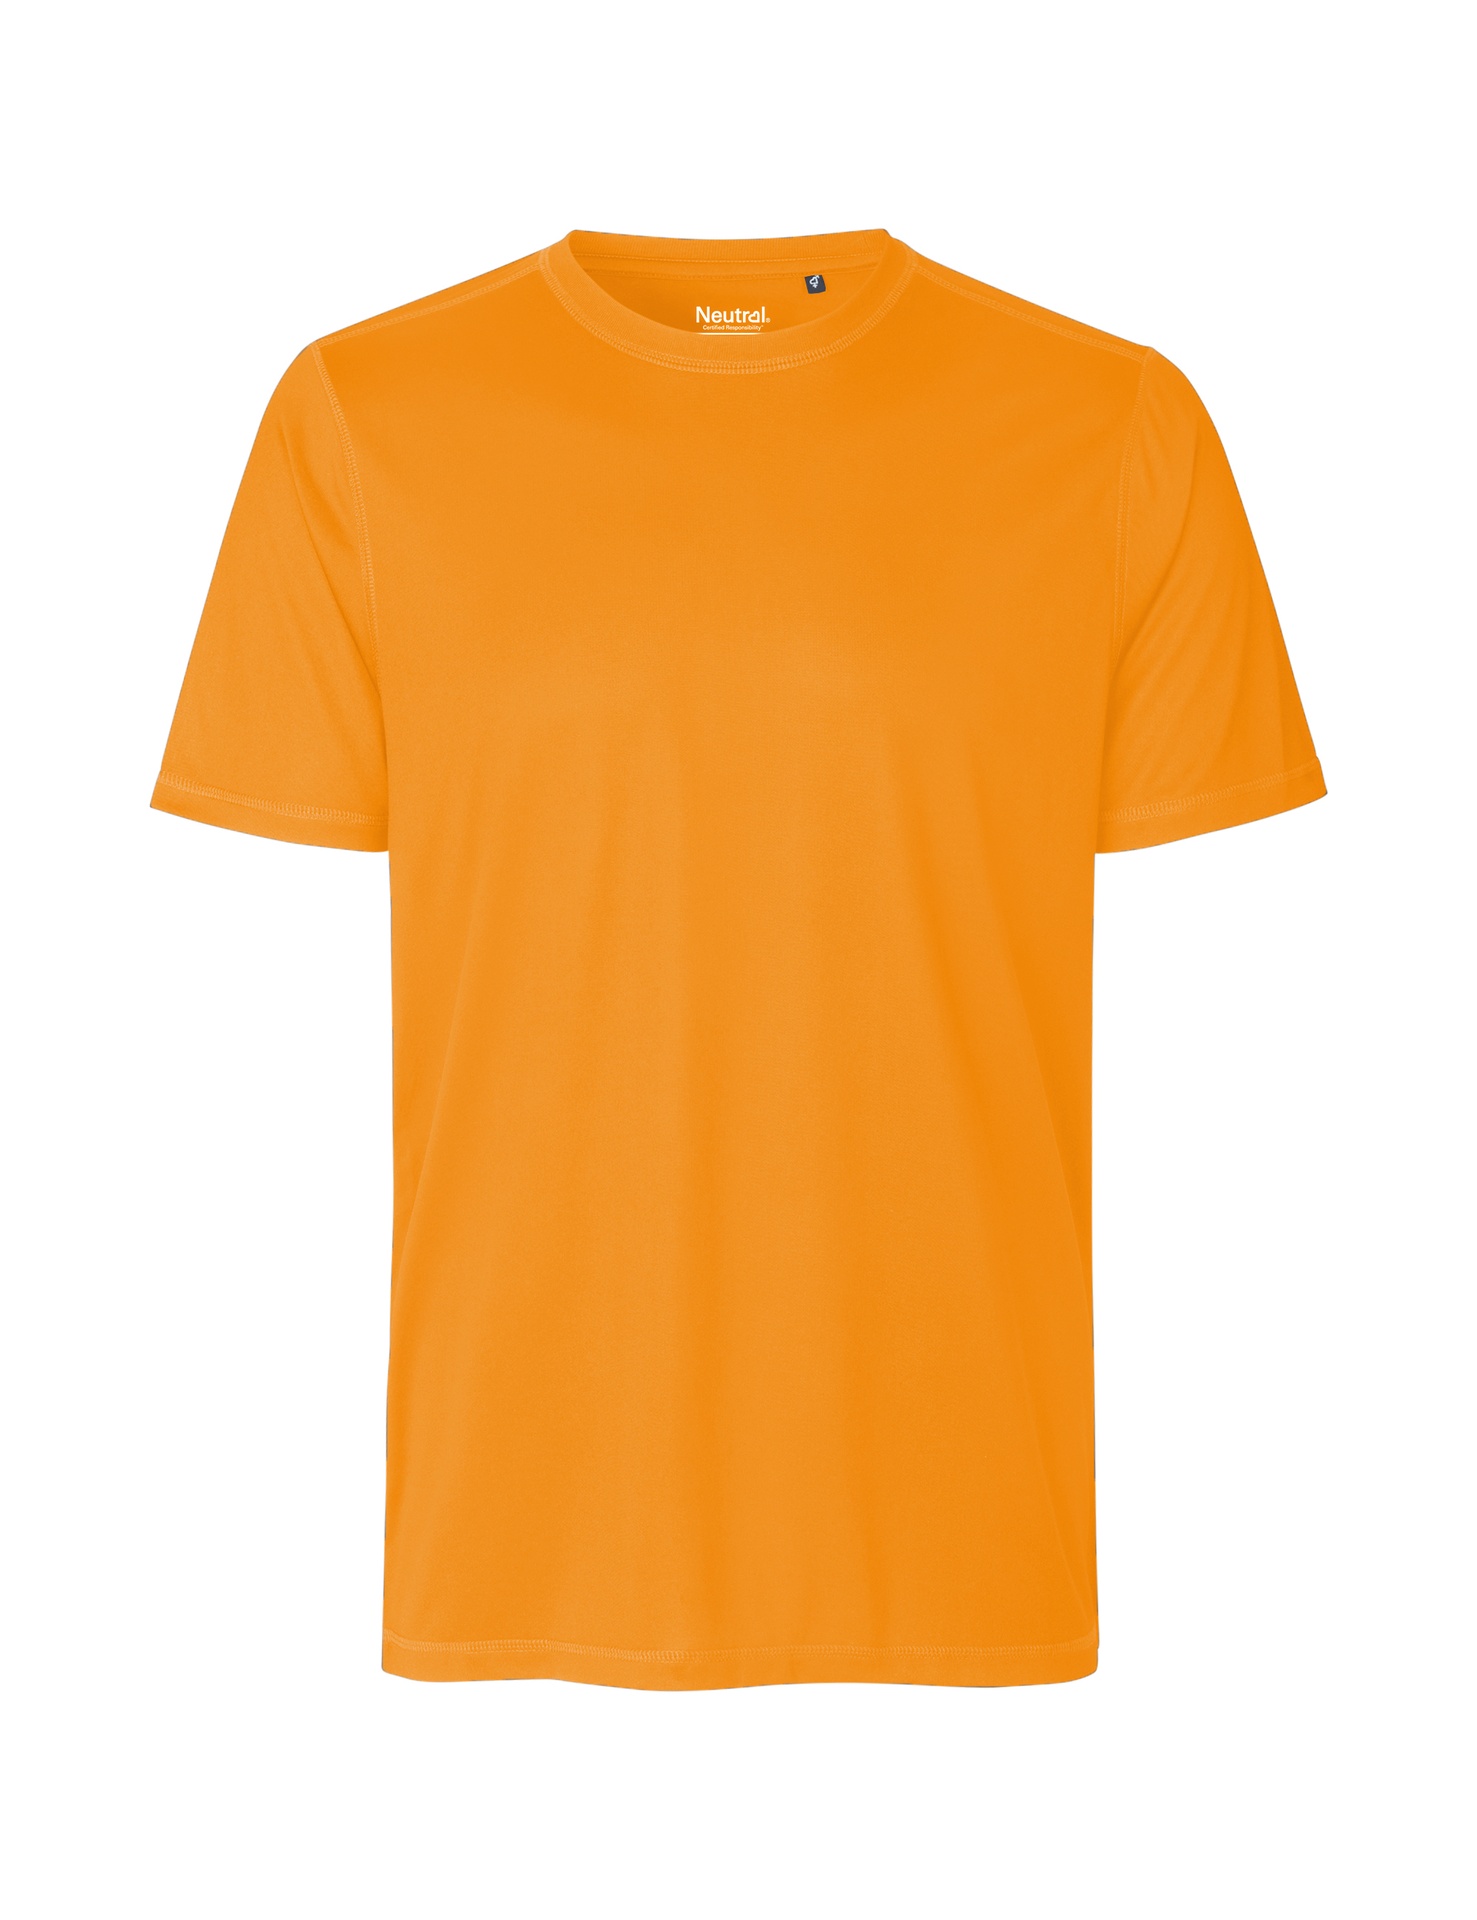 [PR/03792] Recycled Performance T-Shirt (Okay Orange 31, L)